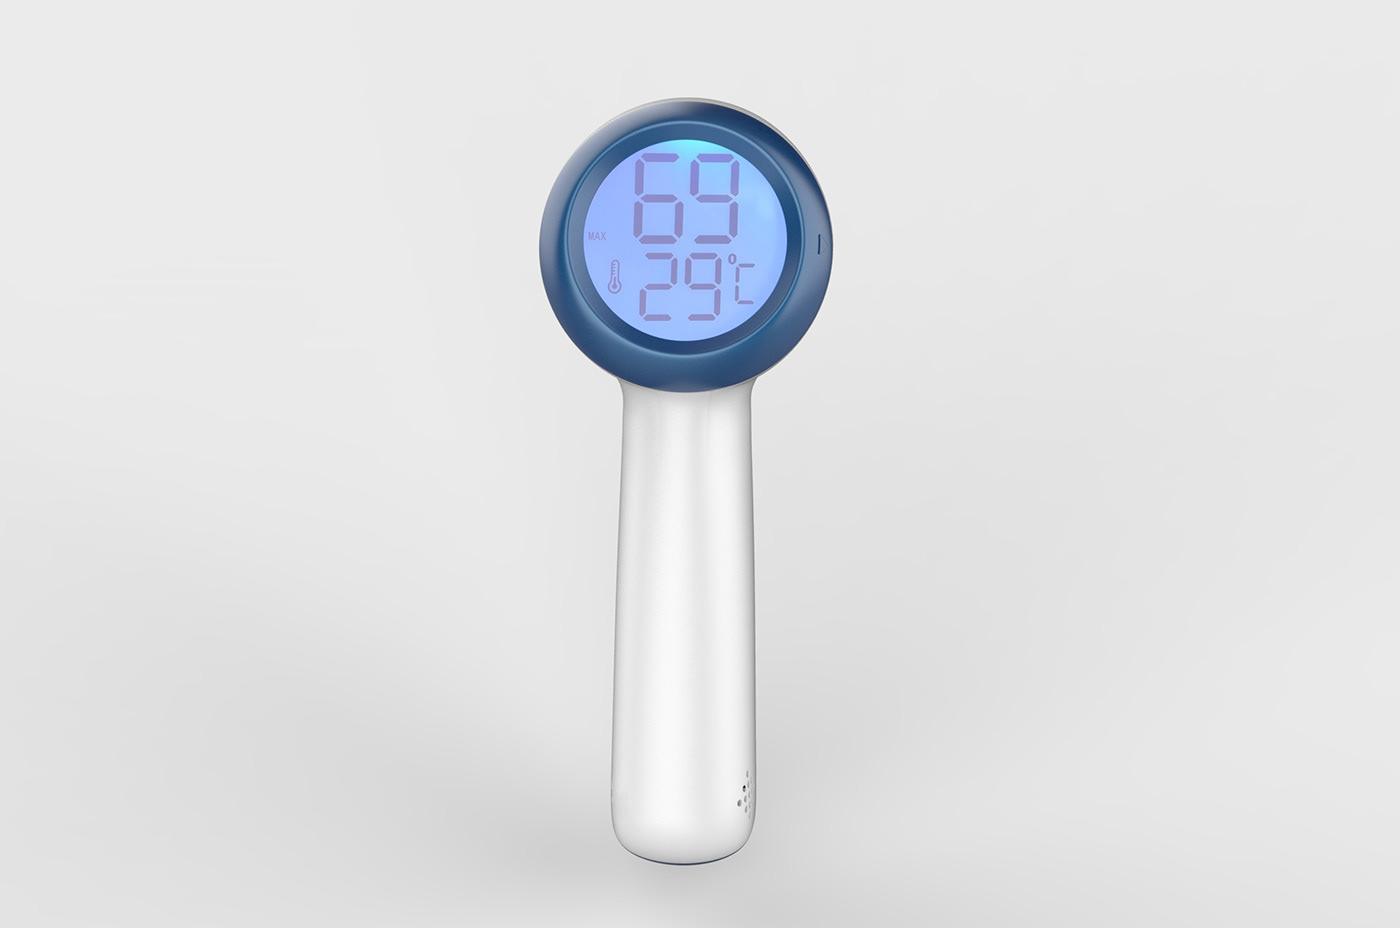 infrared Gun thermometer non-contact thermometer design marco schembri simzo industrial design  Infrared Thermometer non contact thermometer